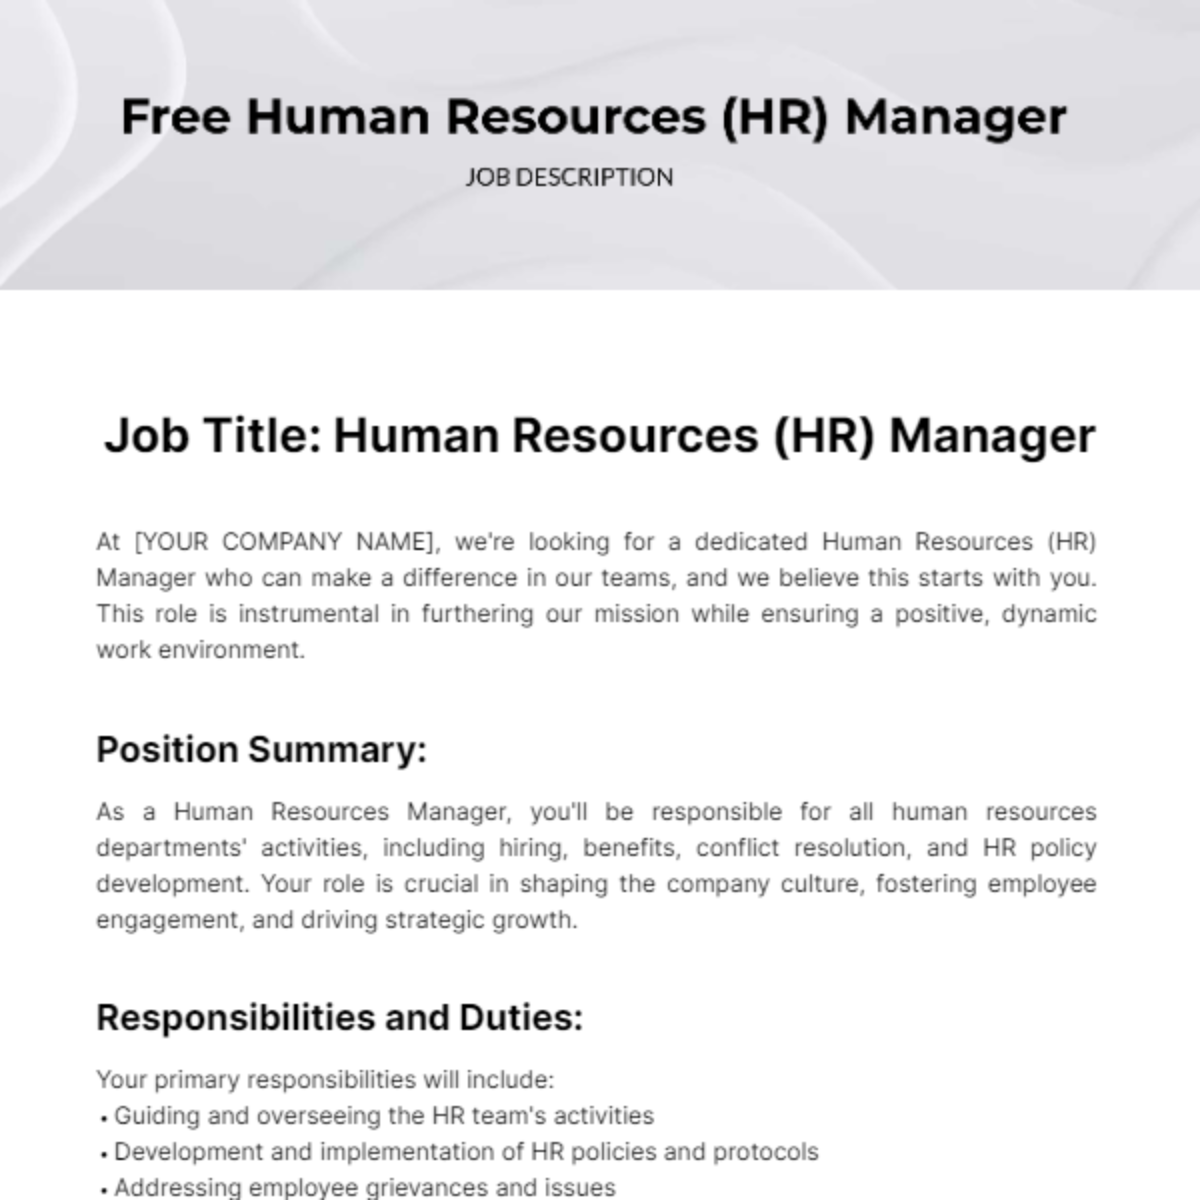 Human Resources (HR) Manager Job Description Template